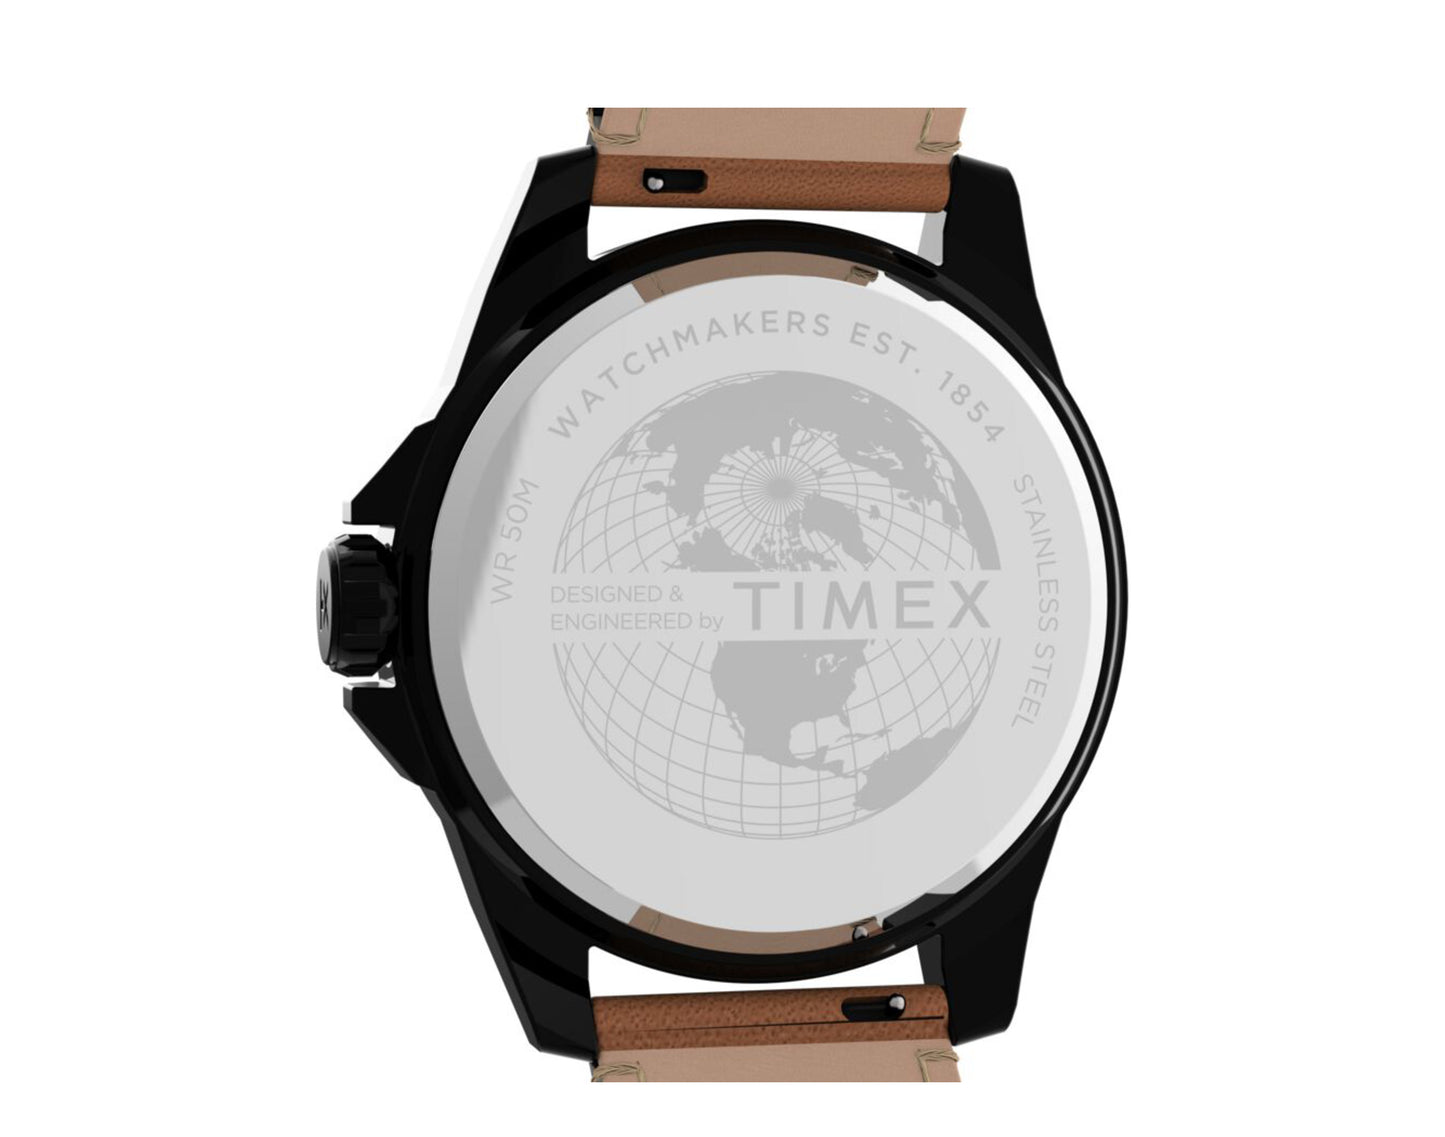 Timex Essex Avenue 44mm Leather Strap Watch